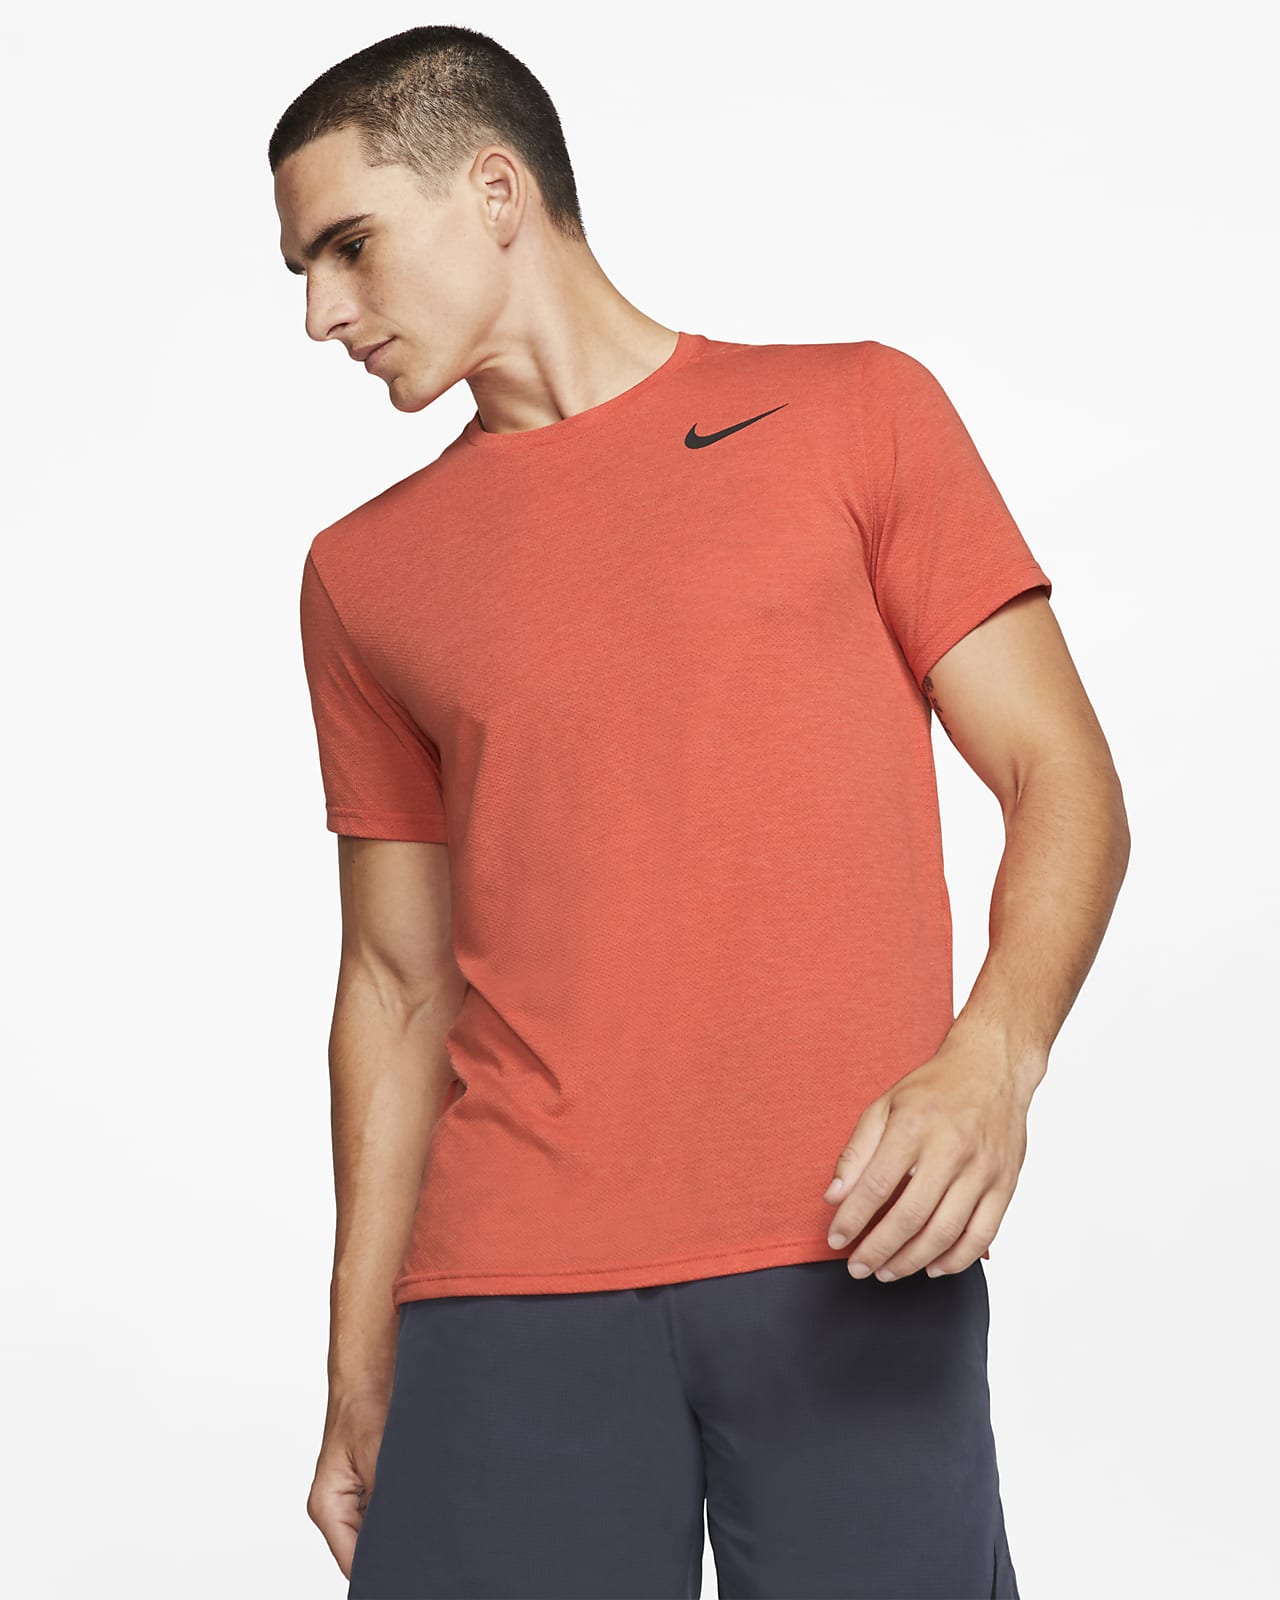 Short-Sleeve Training Top. Nike SA